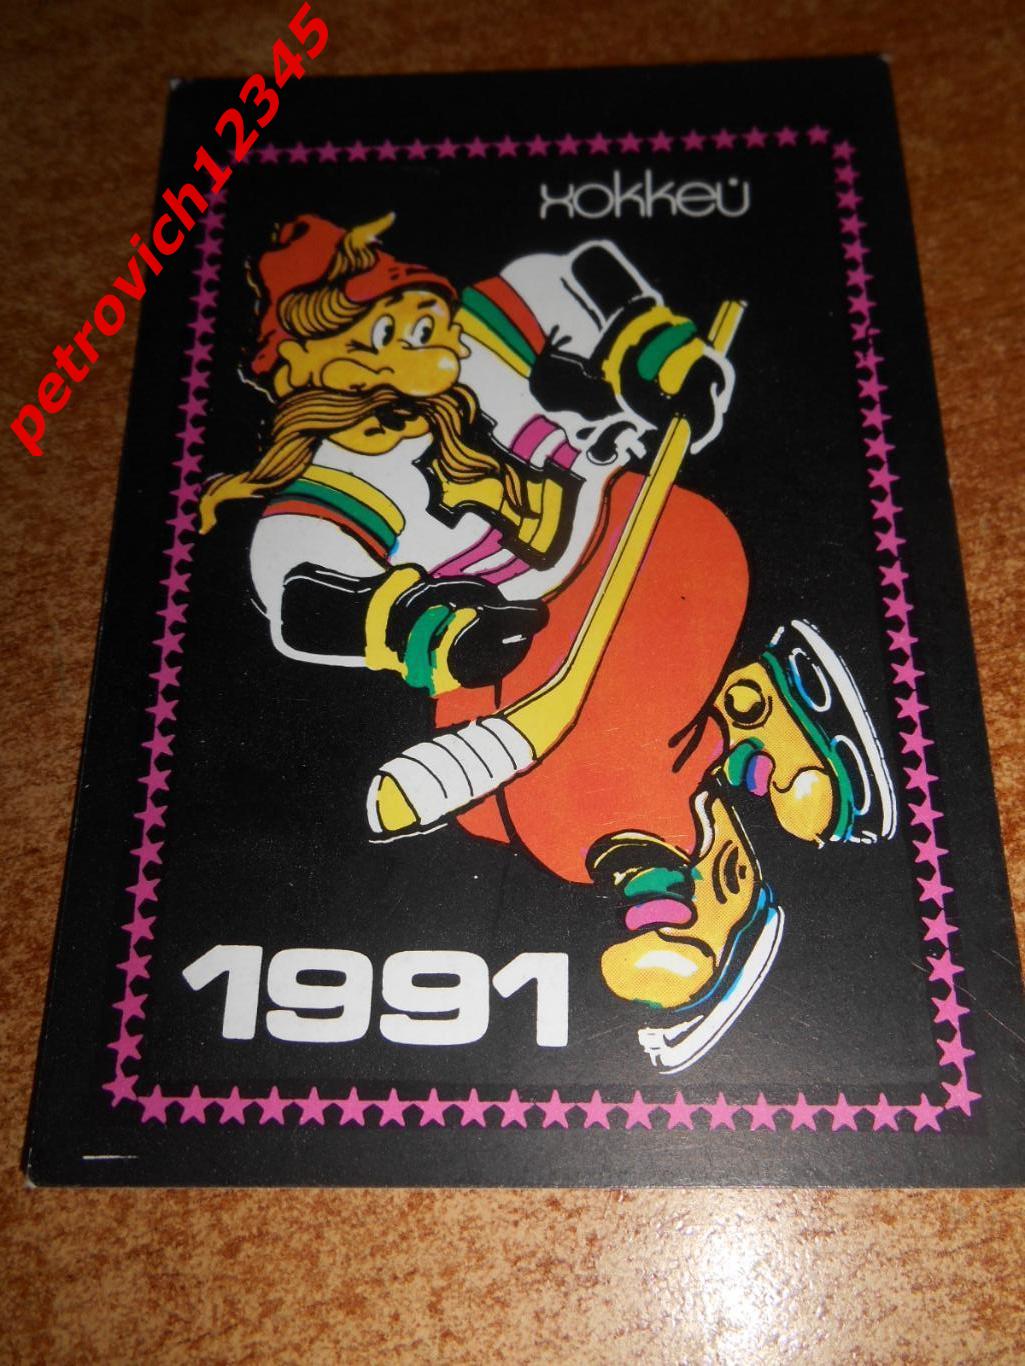 календарик - хоккей - 1991г